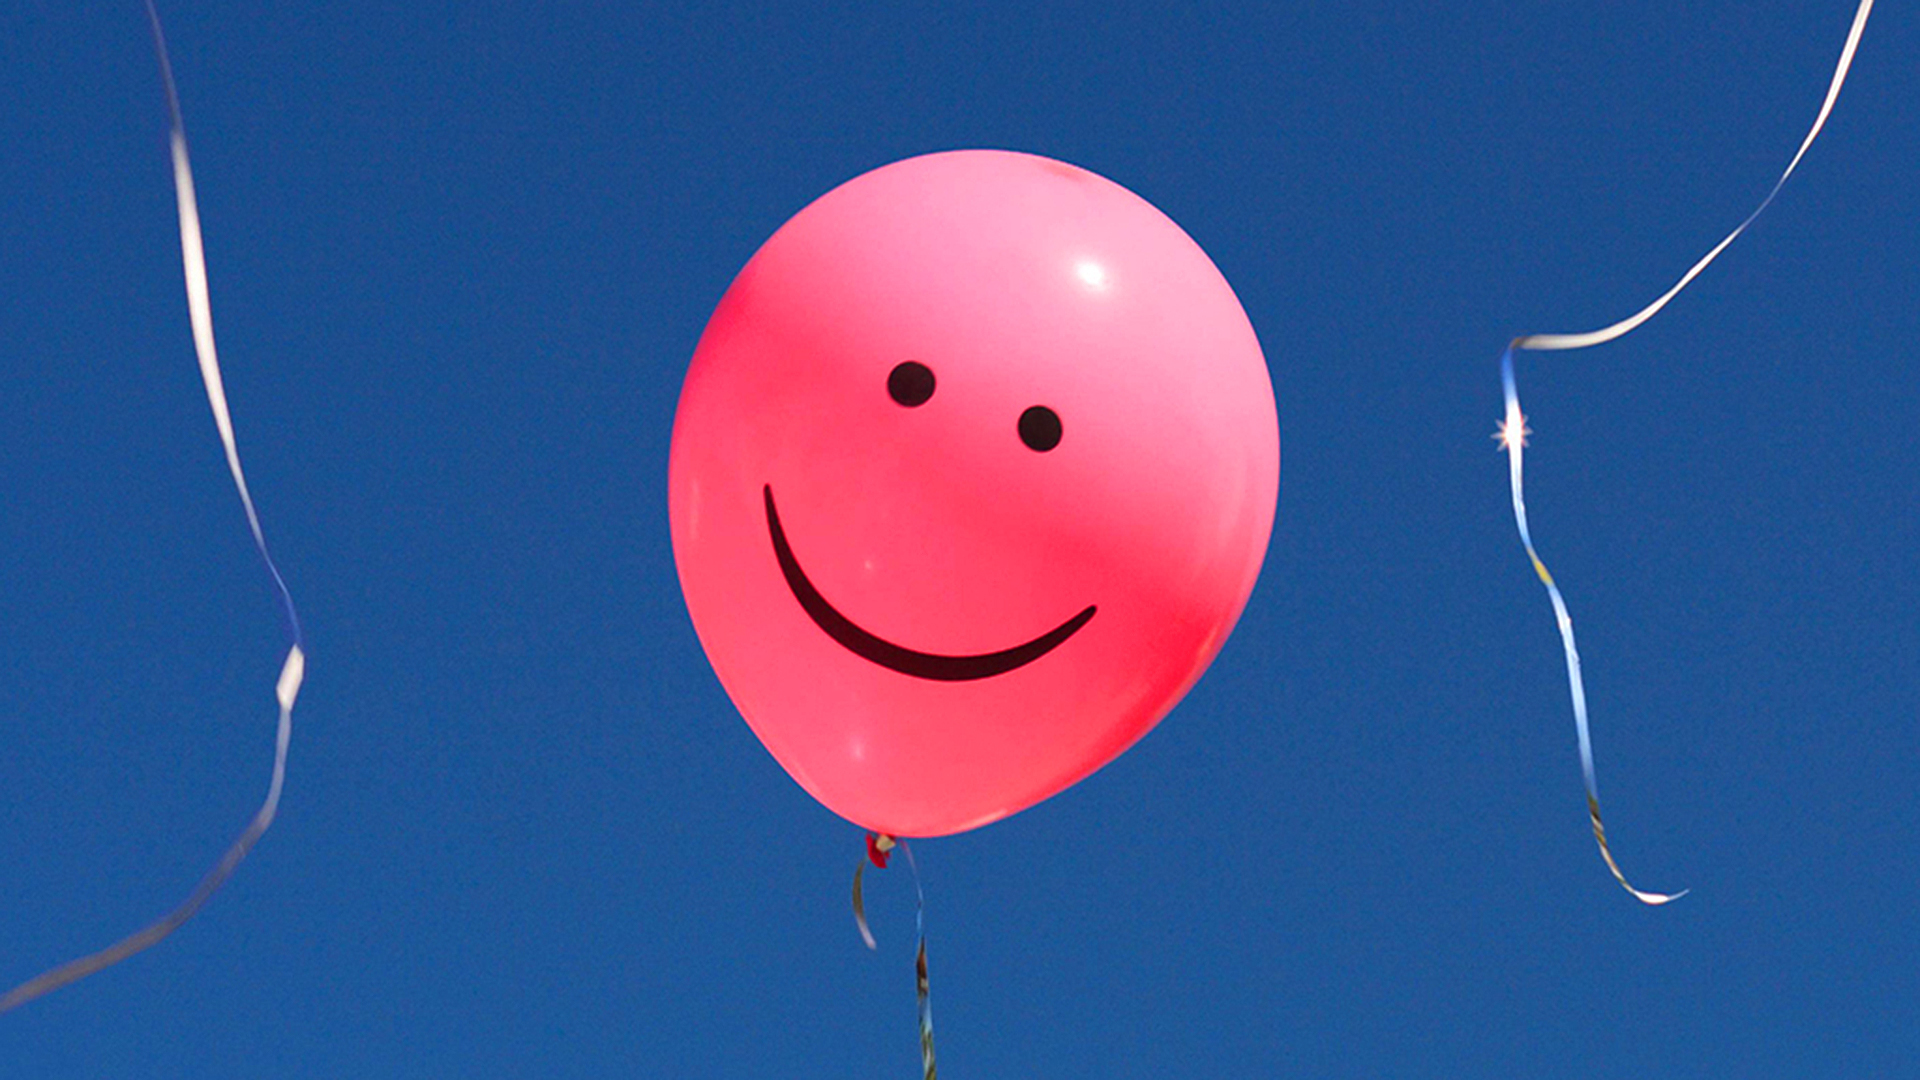 Smiley-Ballon | picture alliance / blickwinkel/P